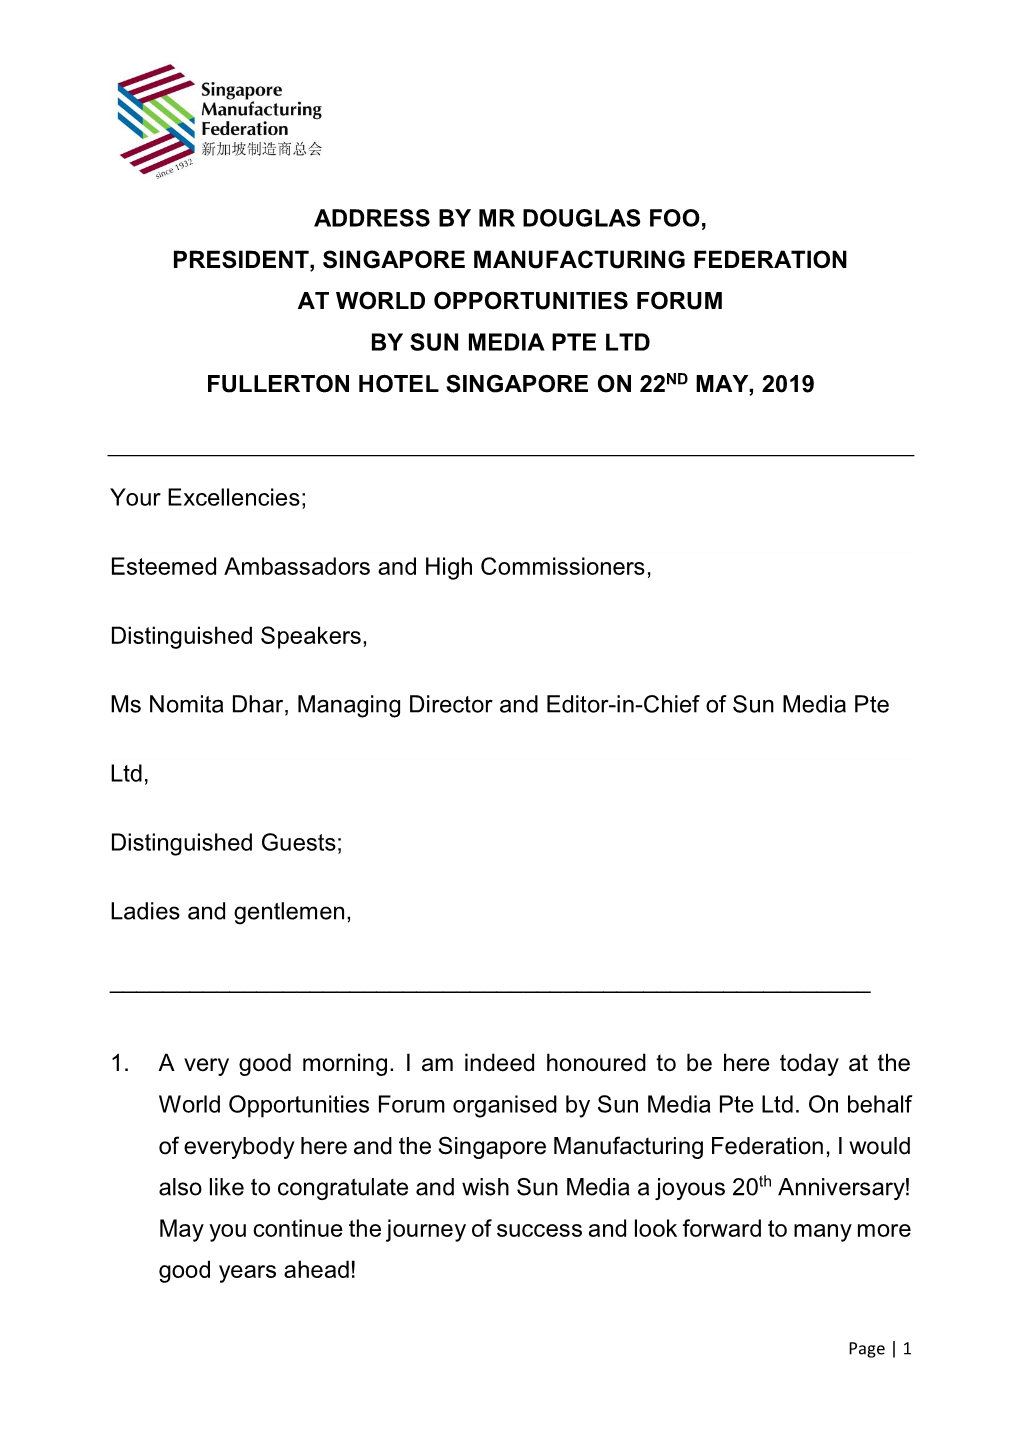 Address by Mr Douglas Foo, President, Singapore